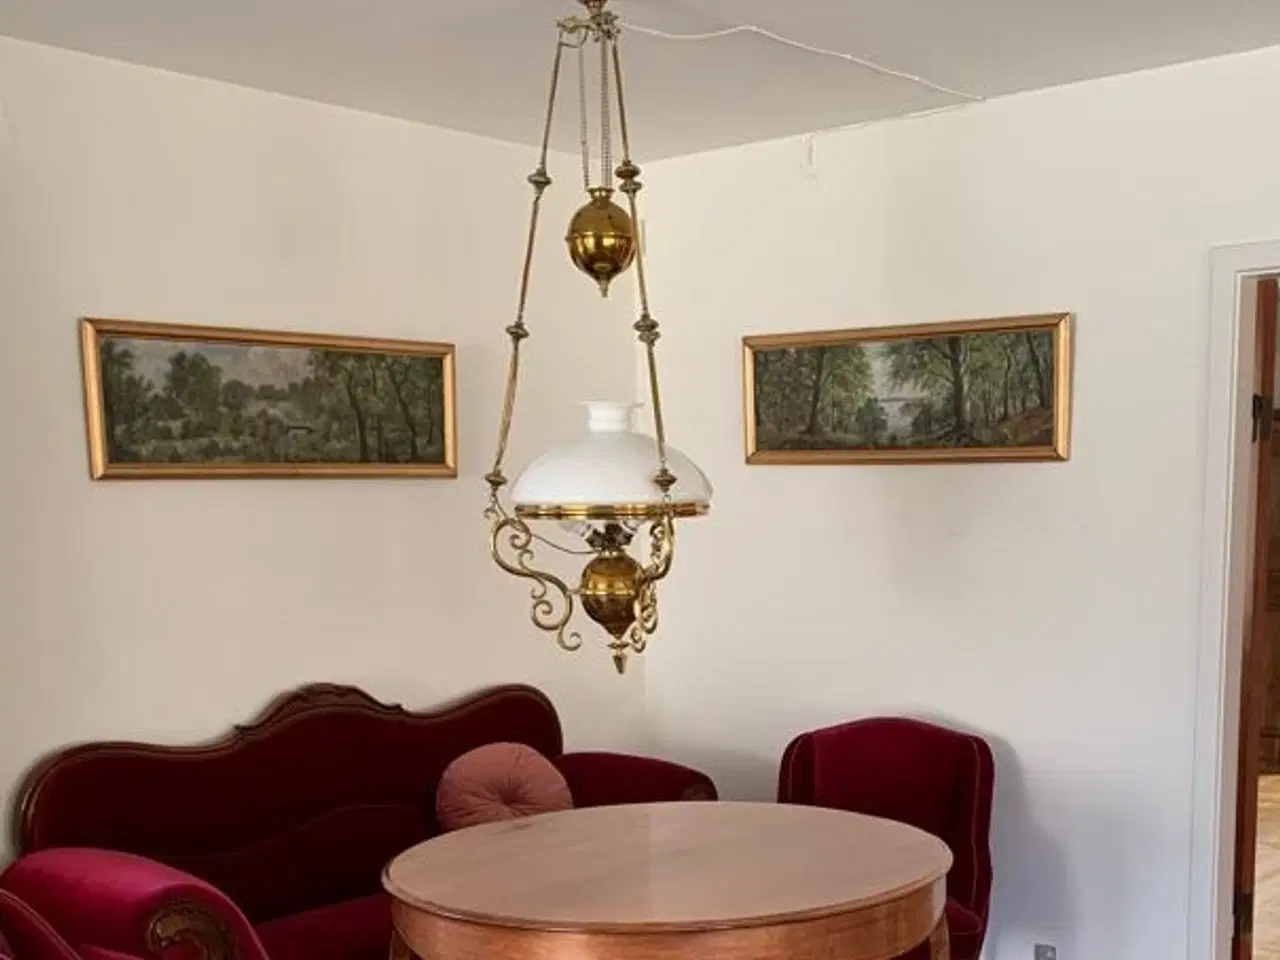 Billede 1 - Antik loftslampe